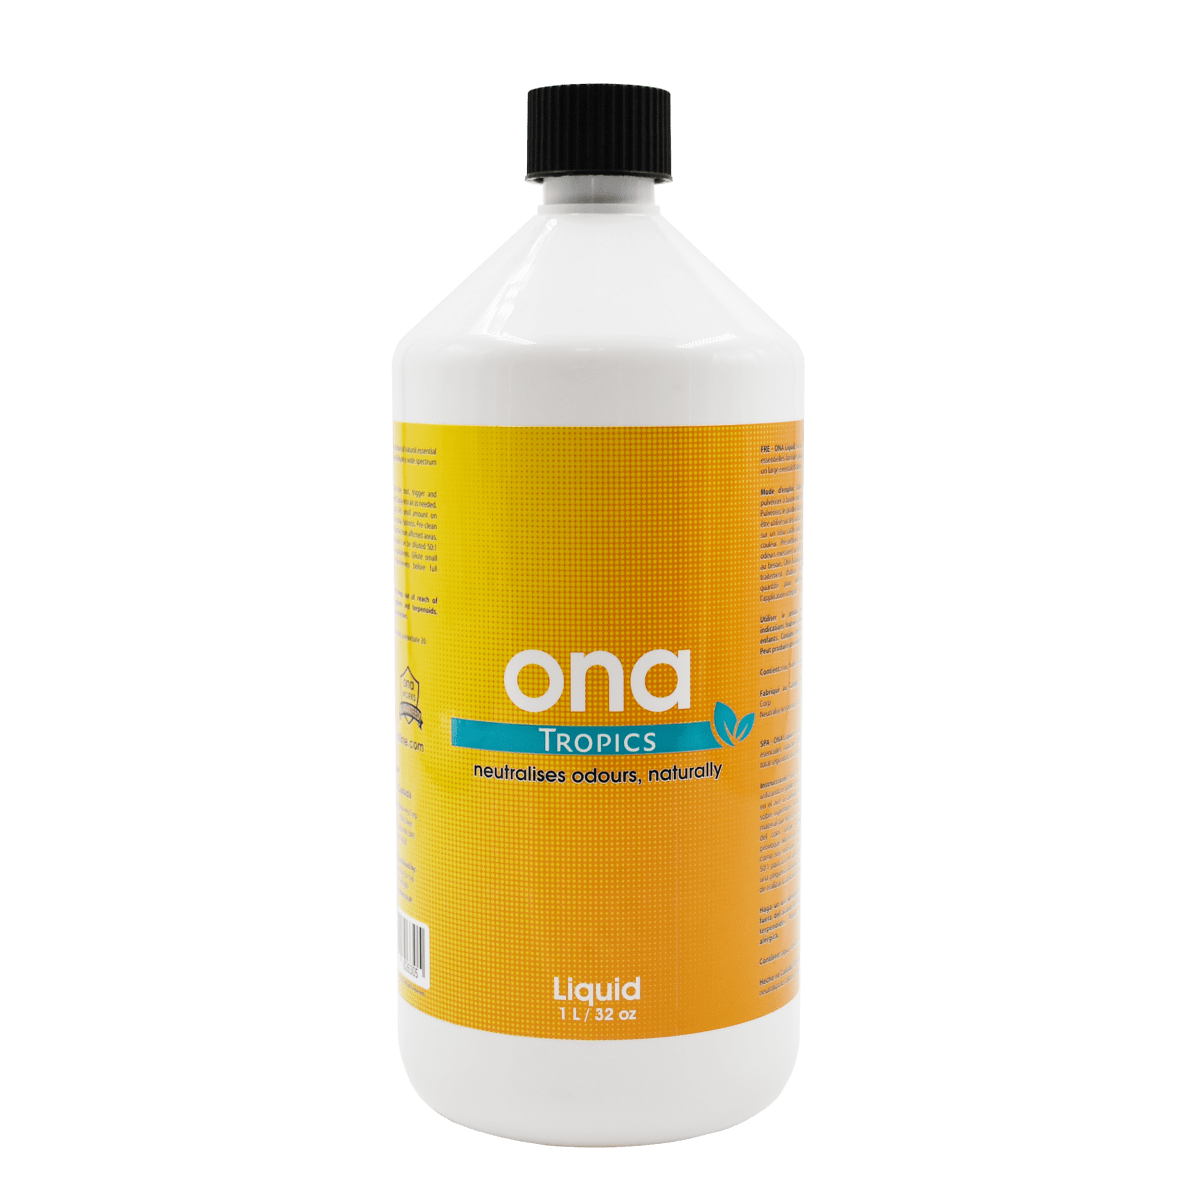 ONA Tropics - bad odours - all natural formula